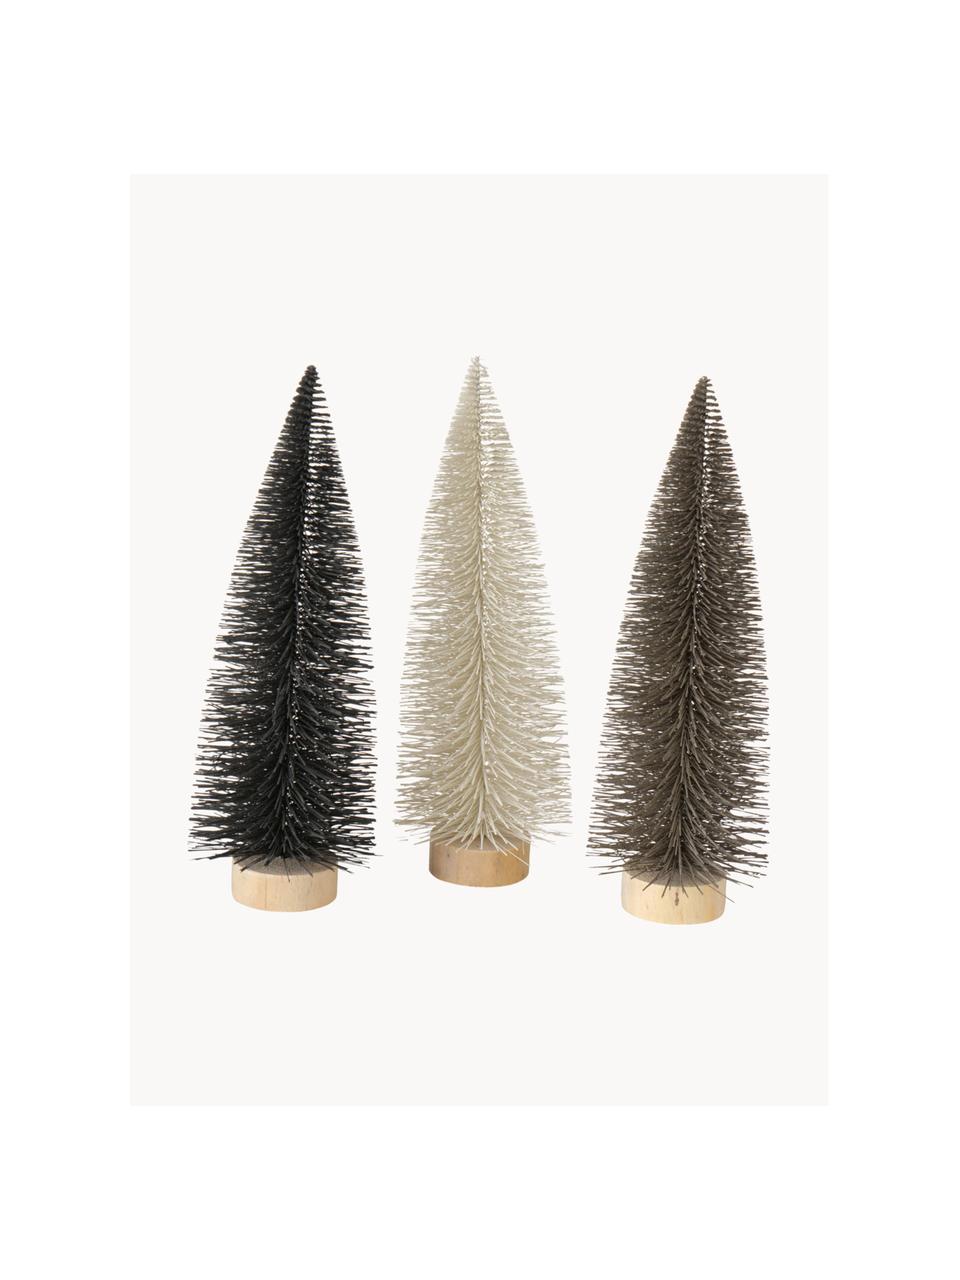 Sapins de Noël décoratifs Tarvo, 3 élém., Noir, grège, blanc, Ø 14 x haut. 41 cm